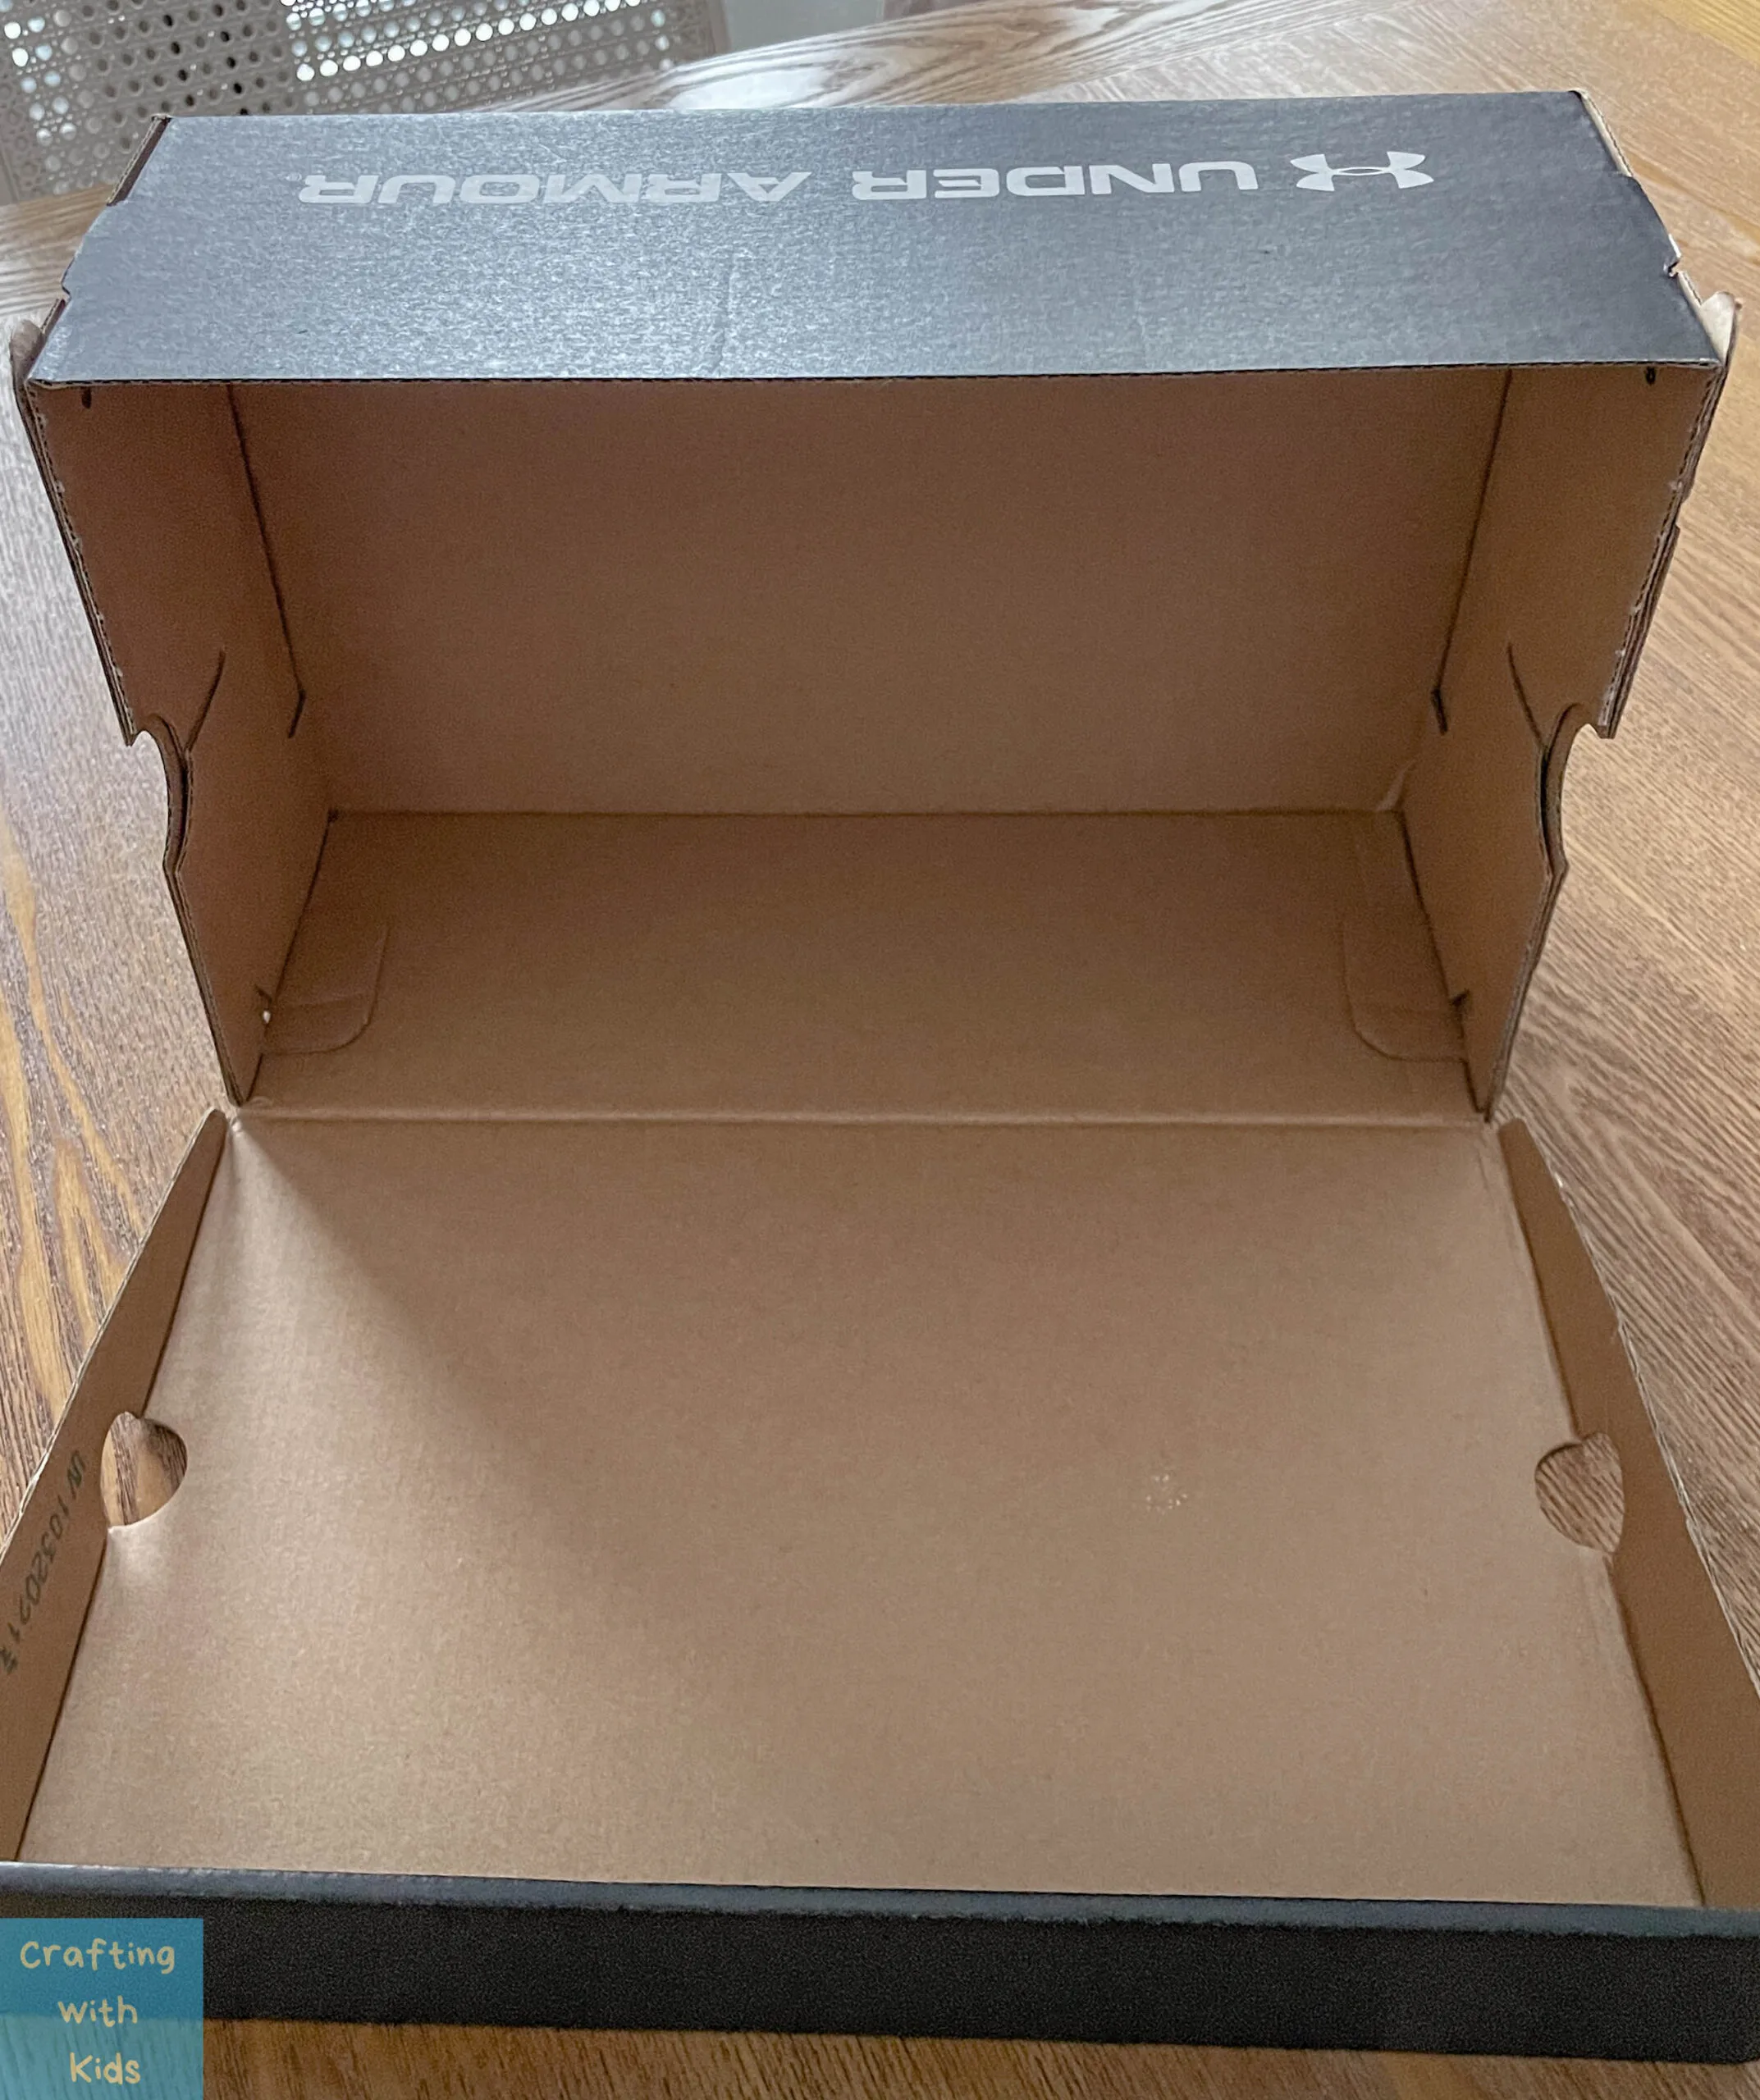 shoebox for base of diorama